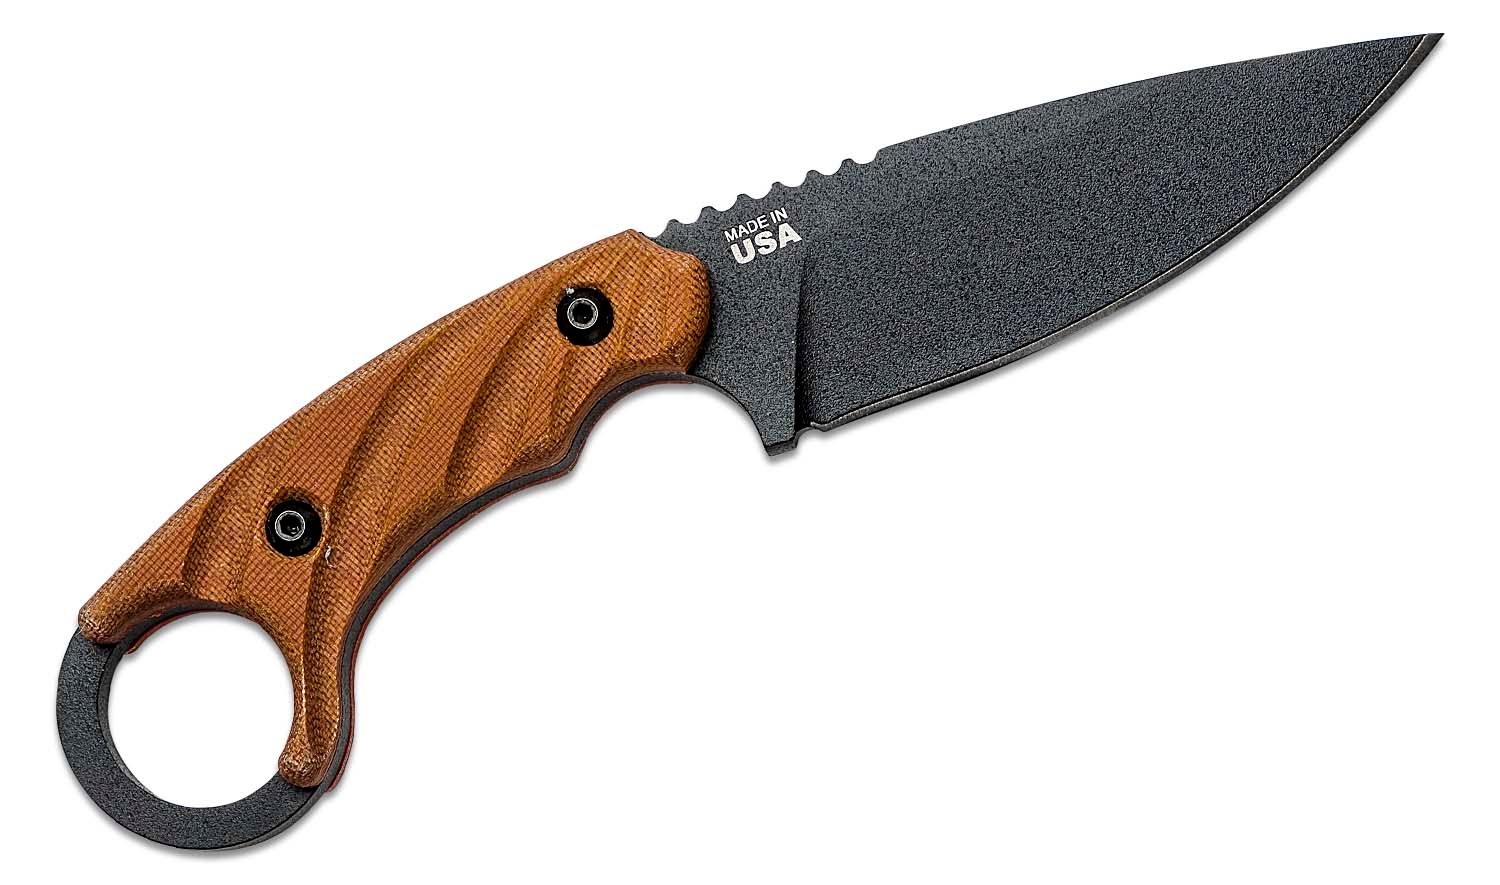 C.U.T. 4.0 Knife - TOPS Knives Tactical OPS USA